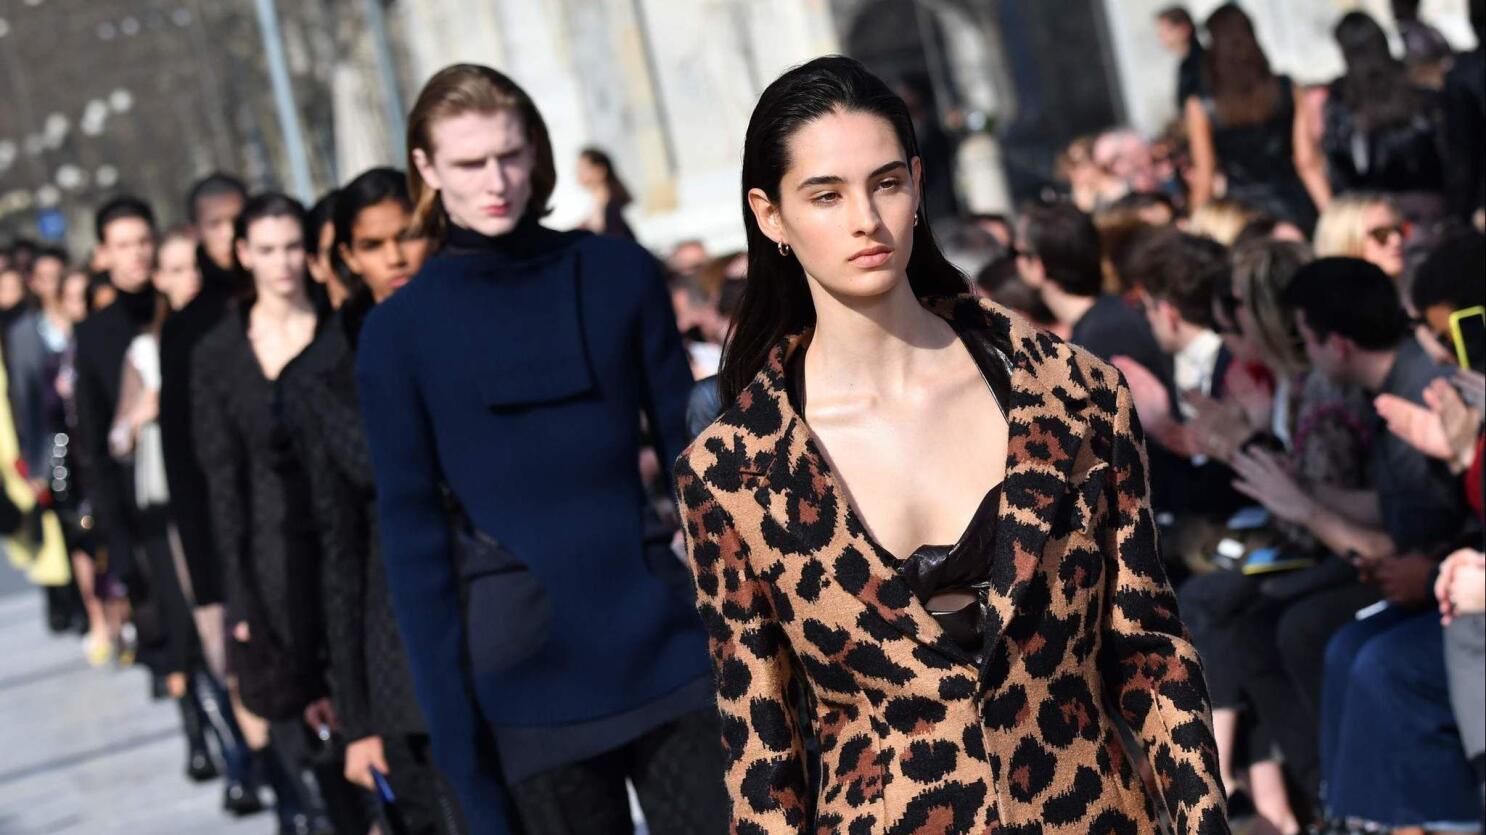 Bottega Veneta's Daniel Lee dismisses the viral fashion moment for